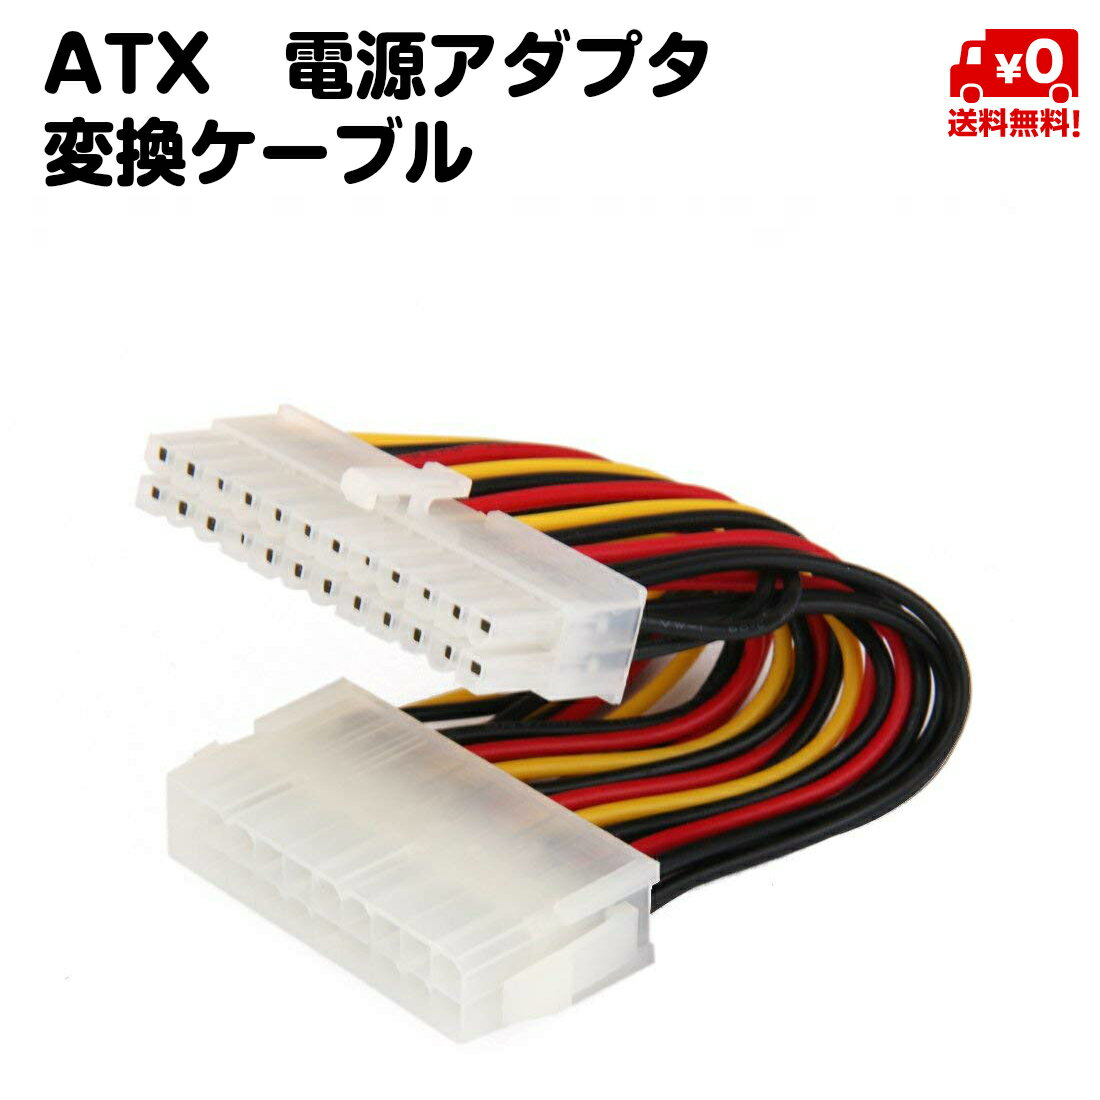 ATX オス24ピン メス20ピン PSU pin 電源